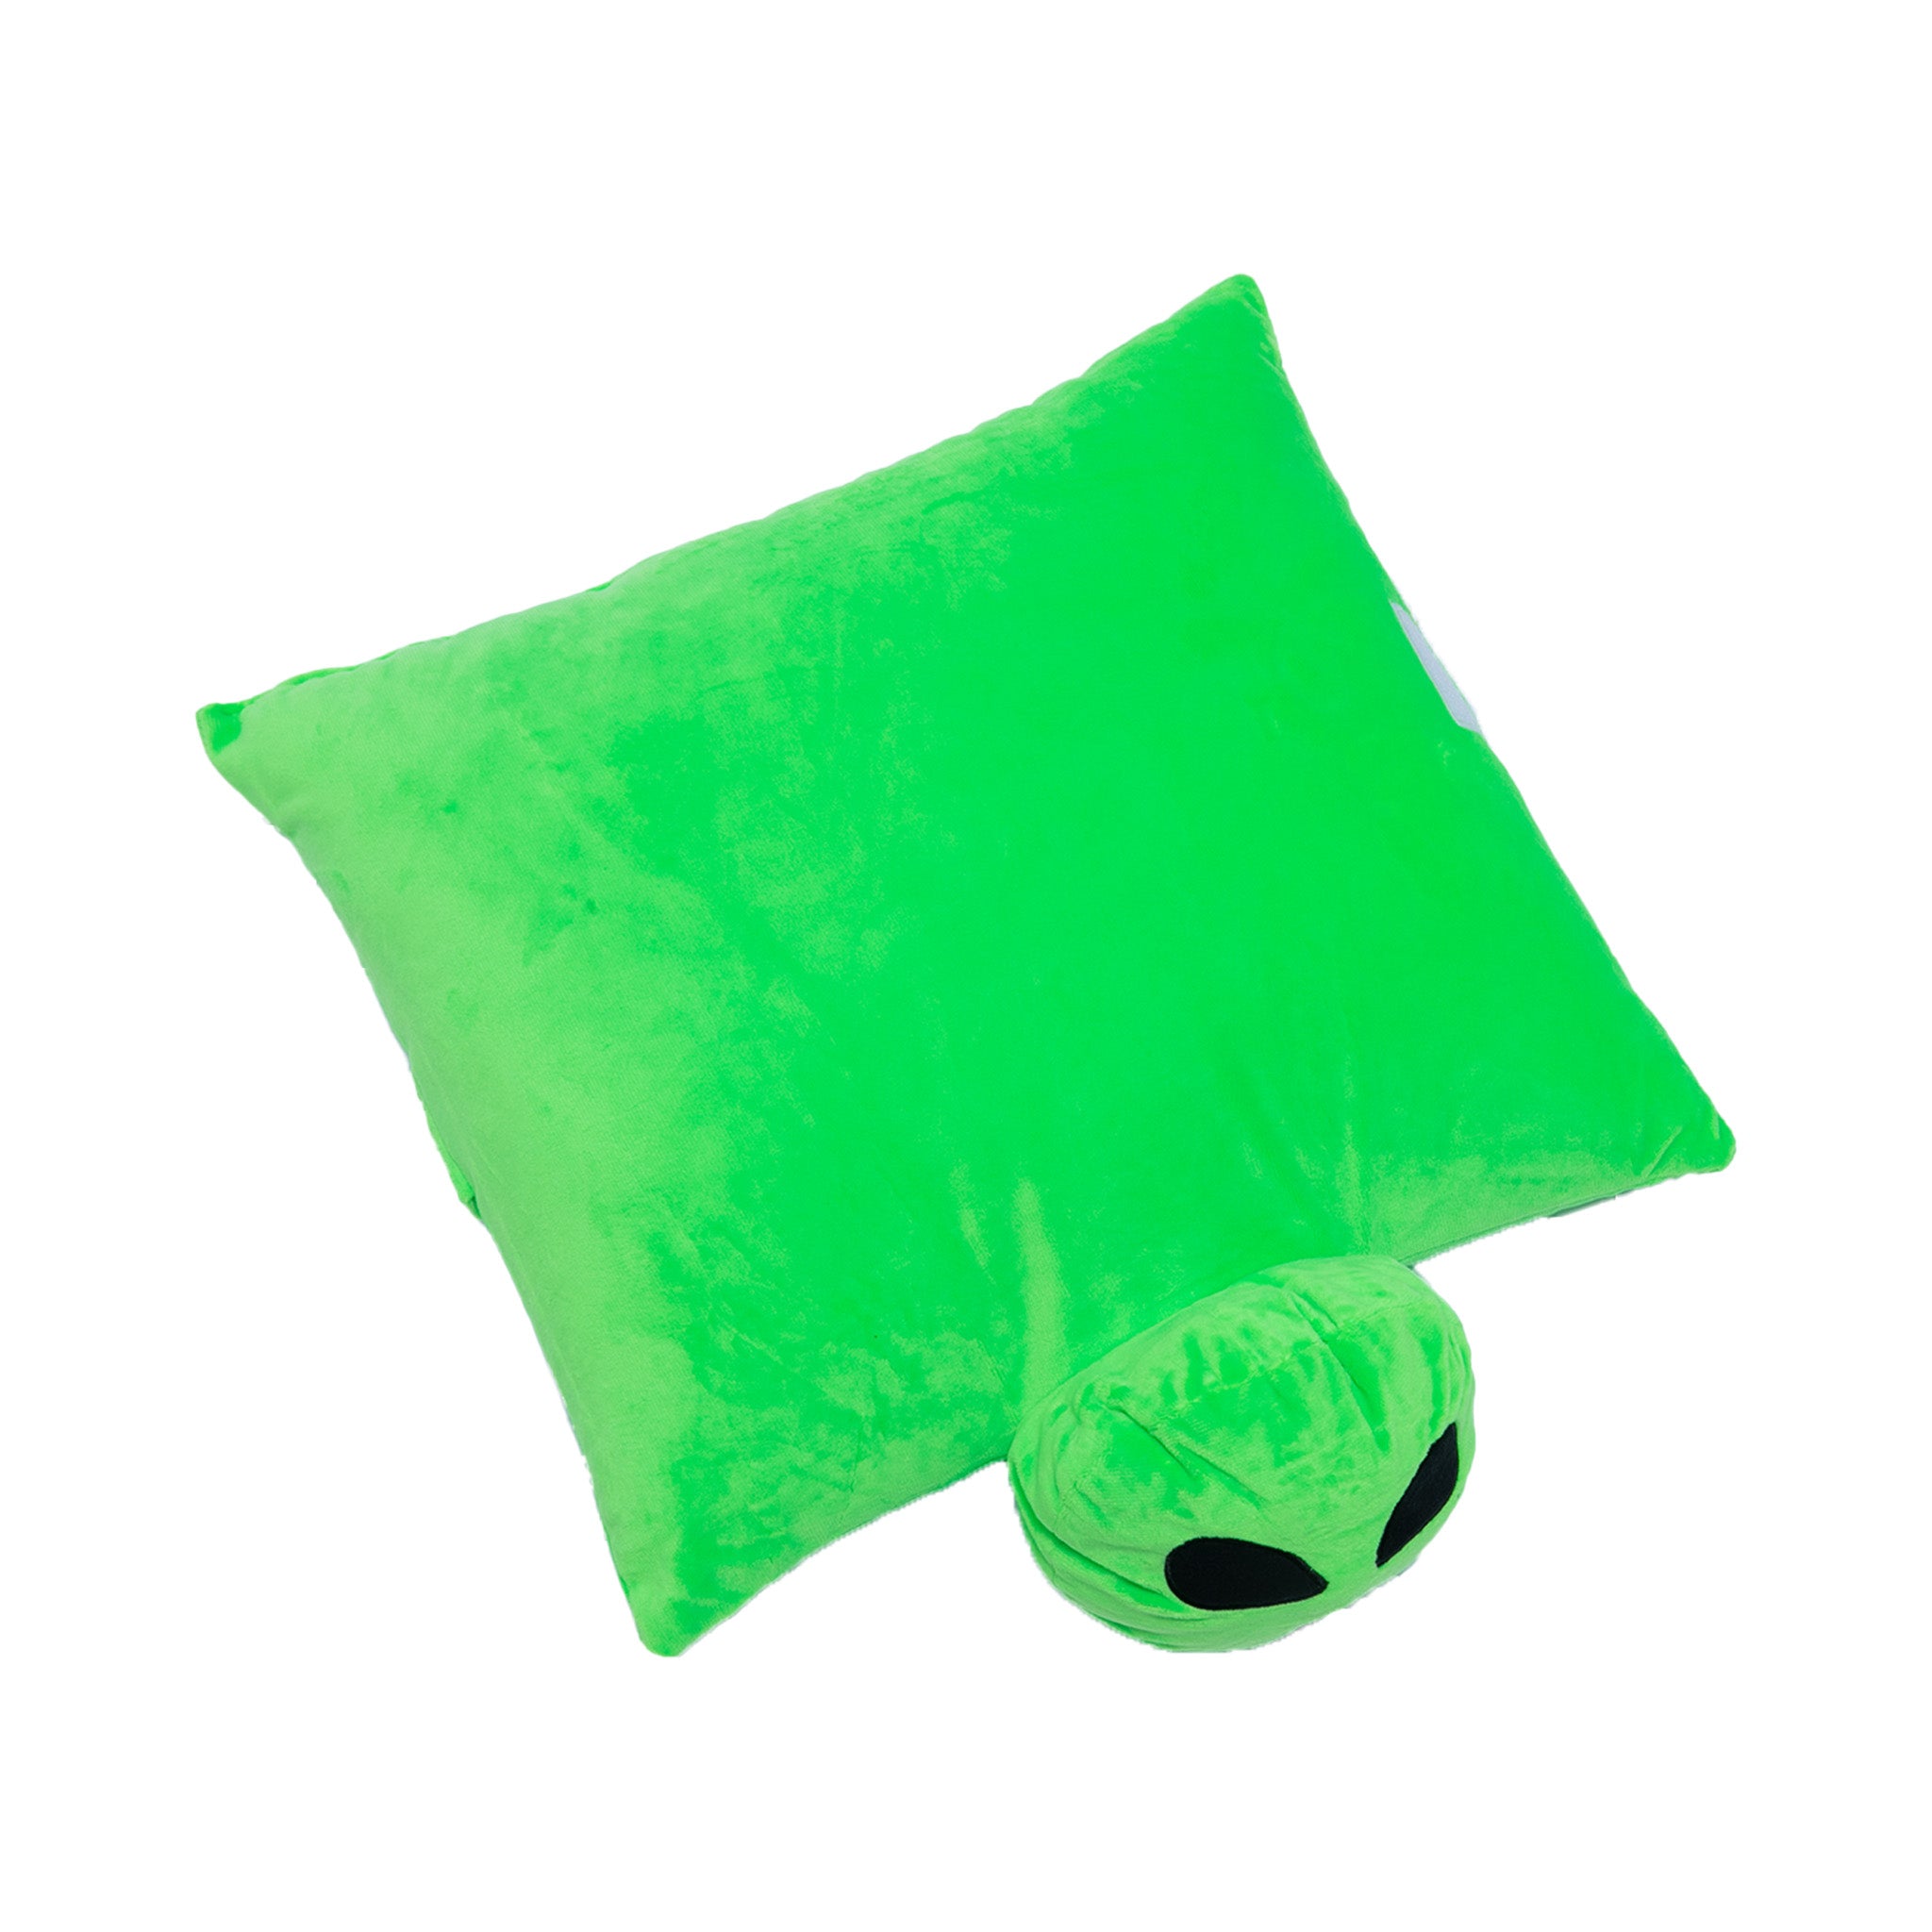 RIPNDIP Lord Alien Pillow Friend (Green)